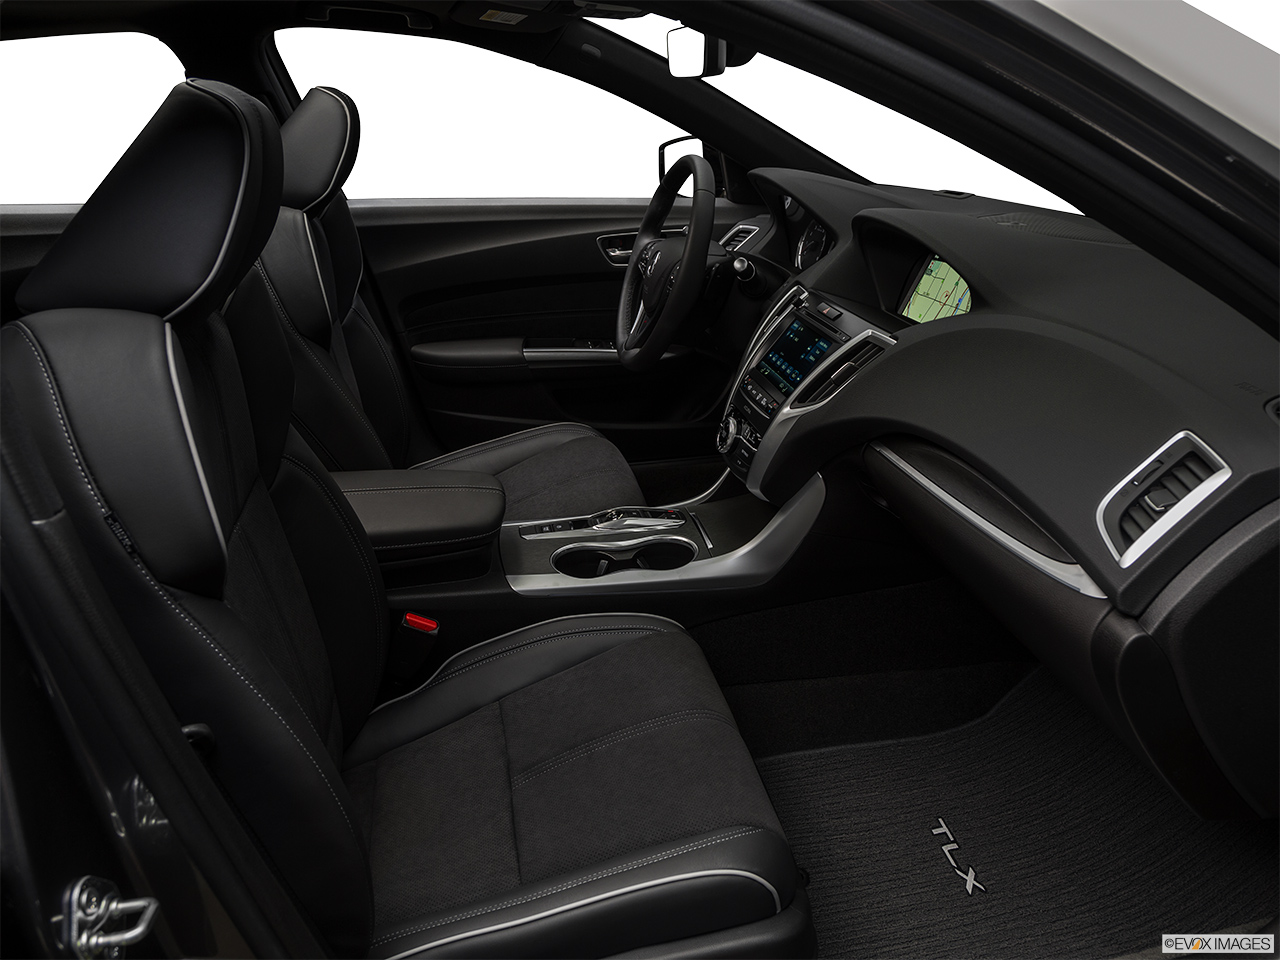 2020 Acura TLX 3.5L Passenger seat. 